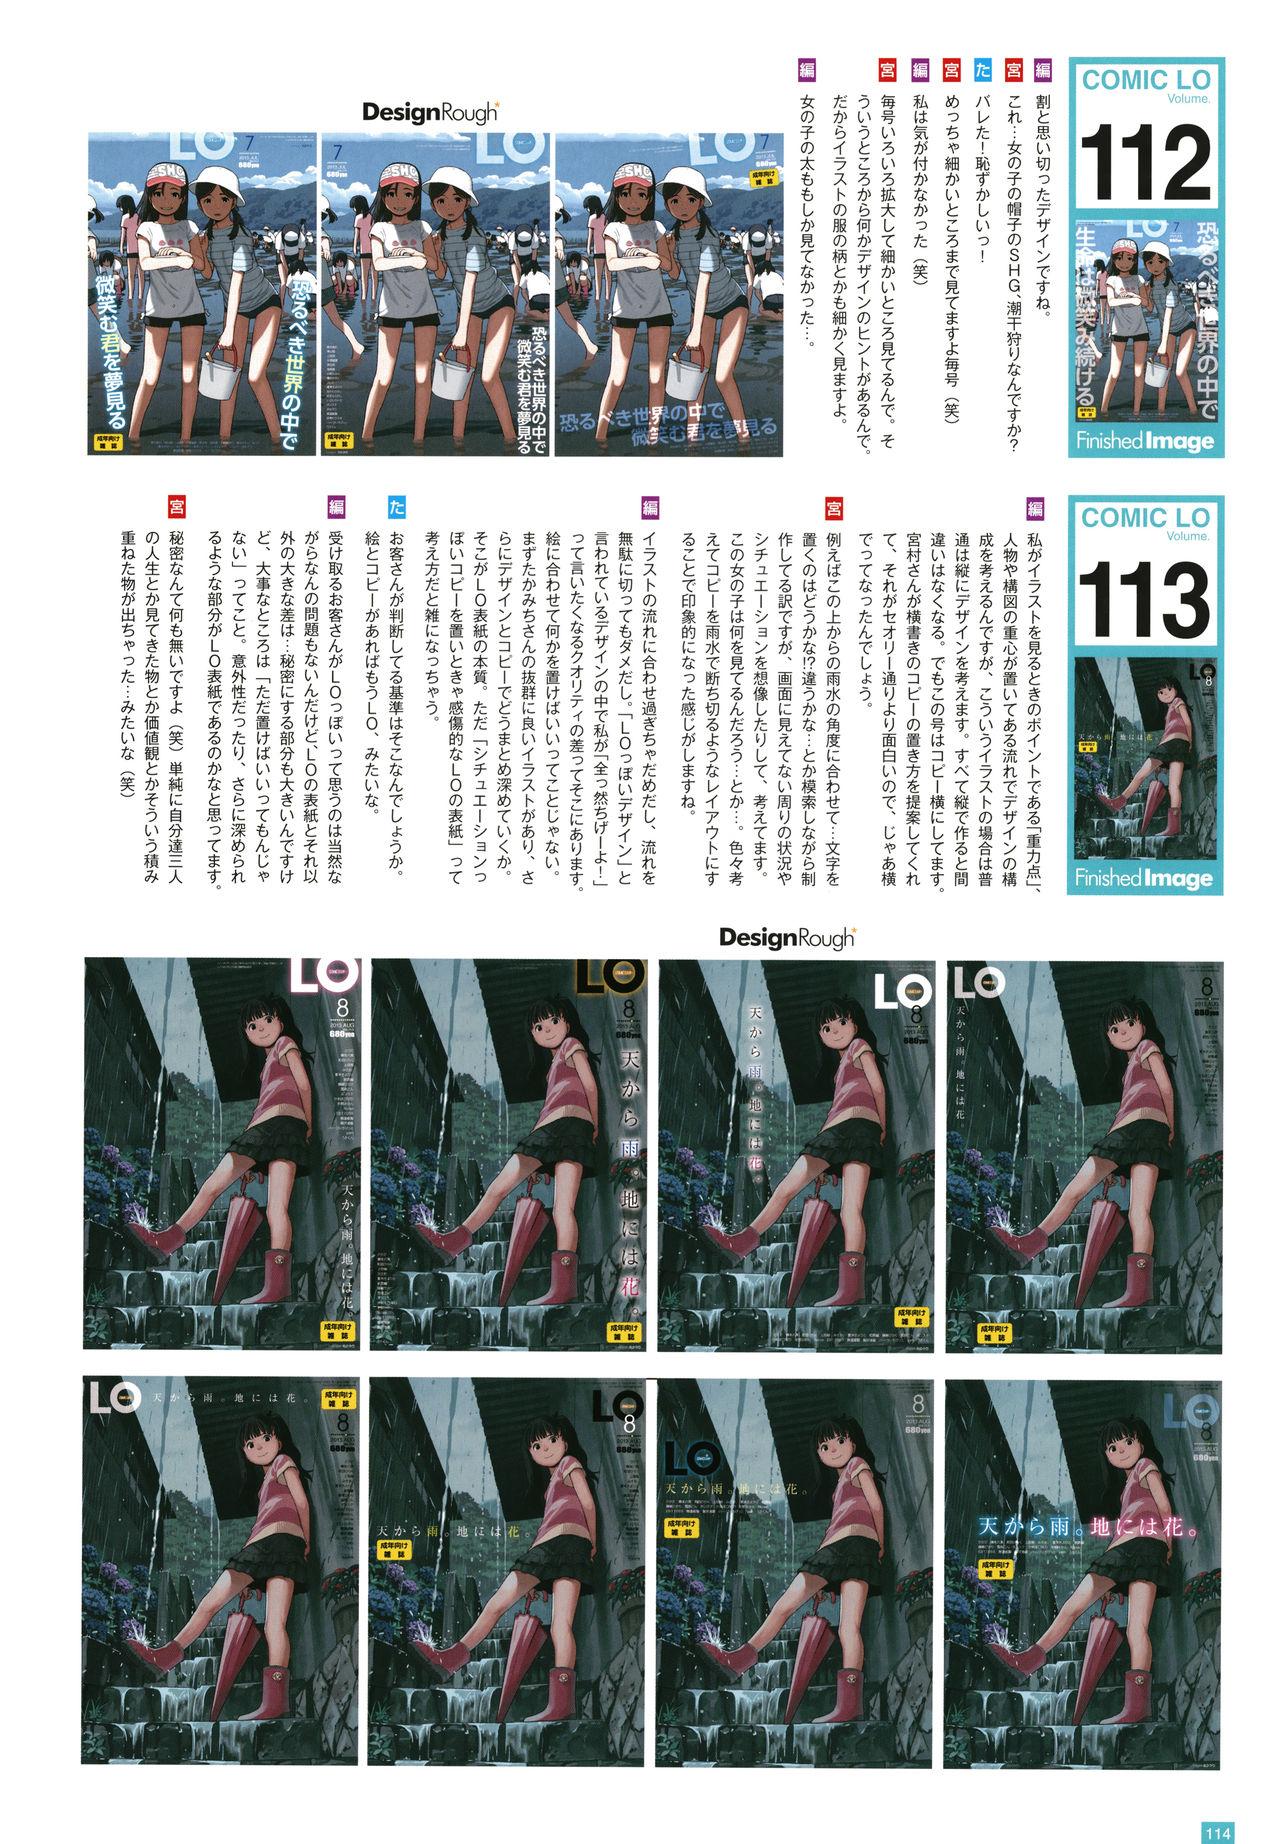 [Takamichi] LO Artbook 2-B TAKAMICHI LO-fi WORKS 116